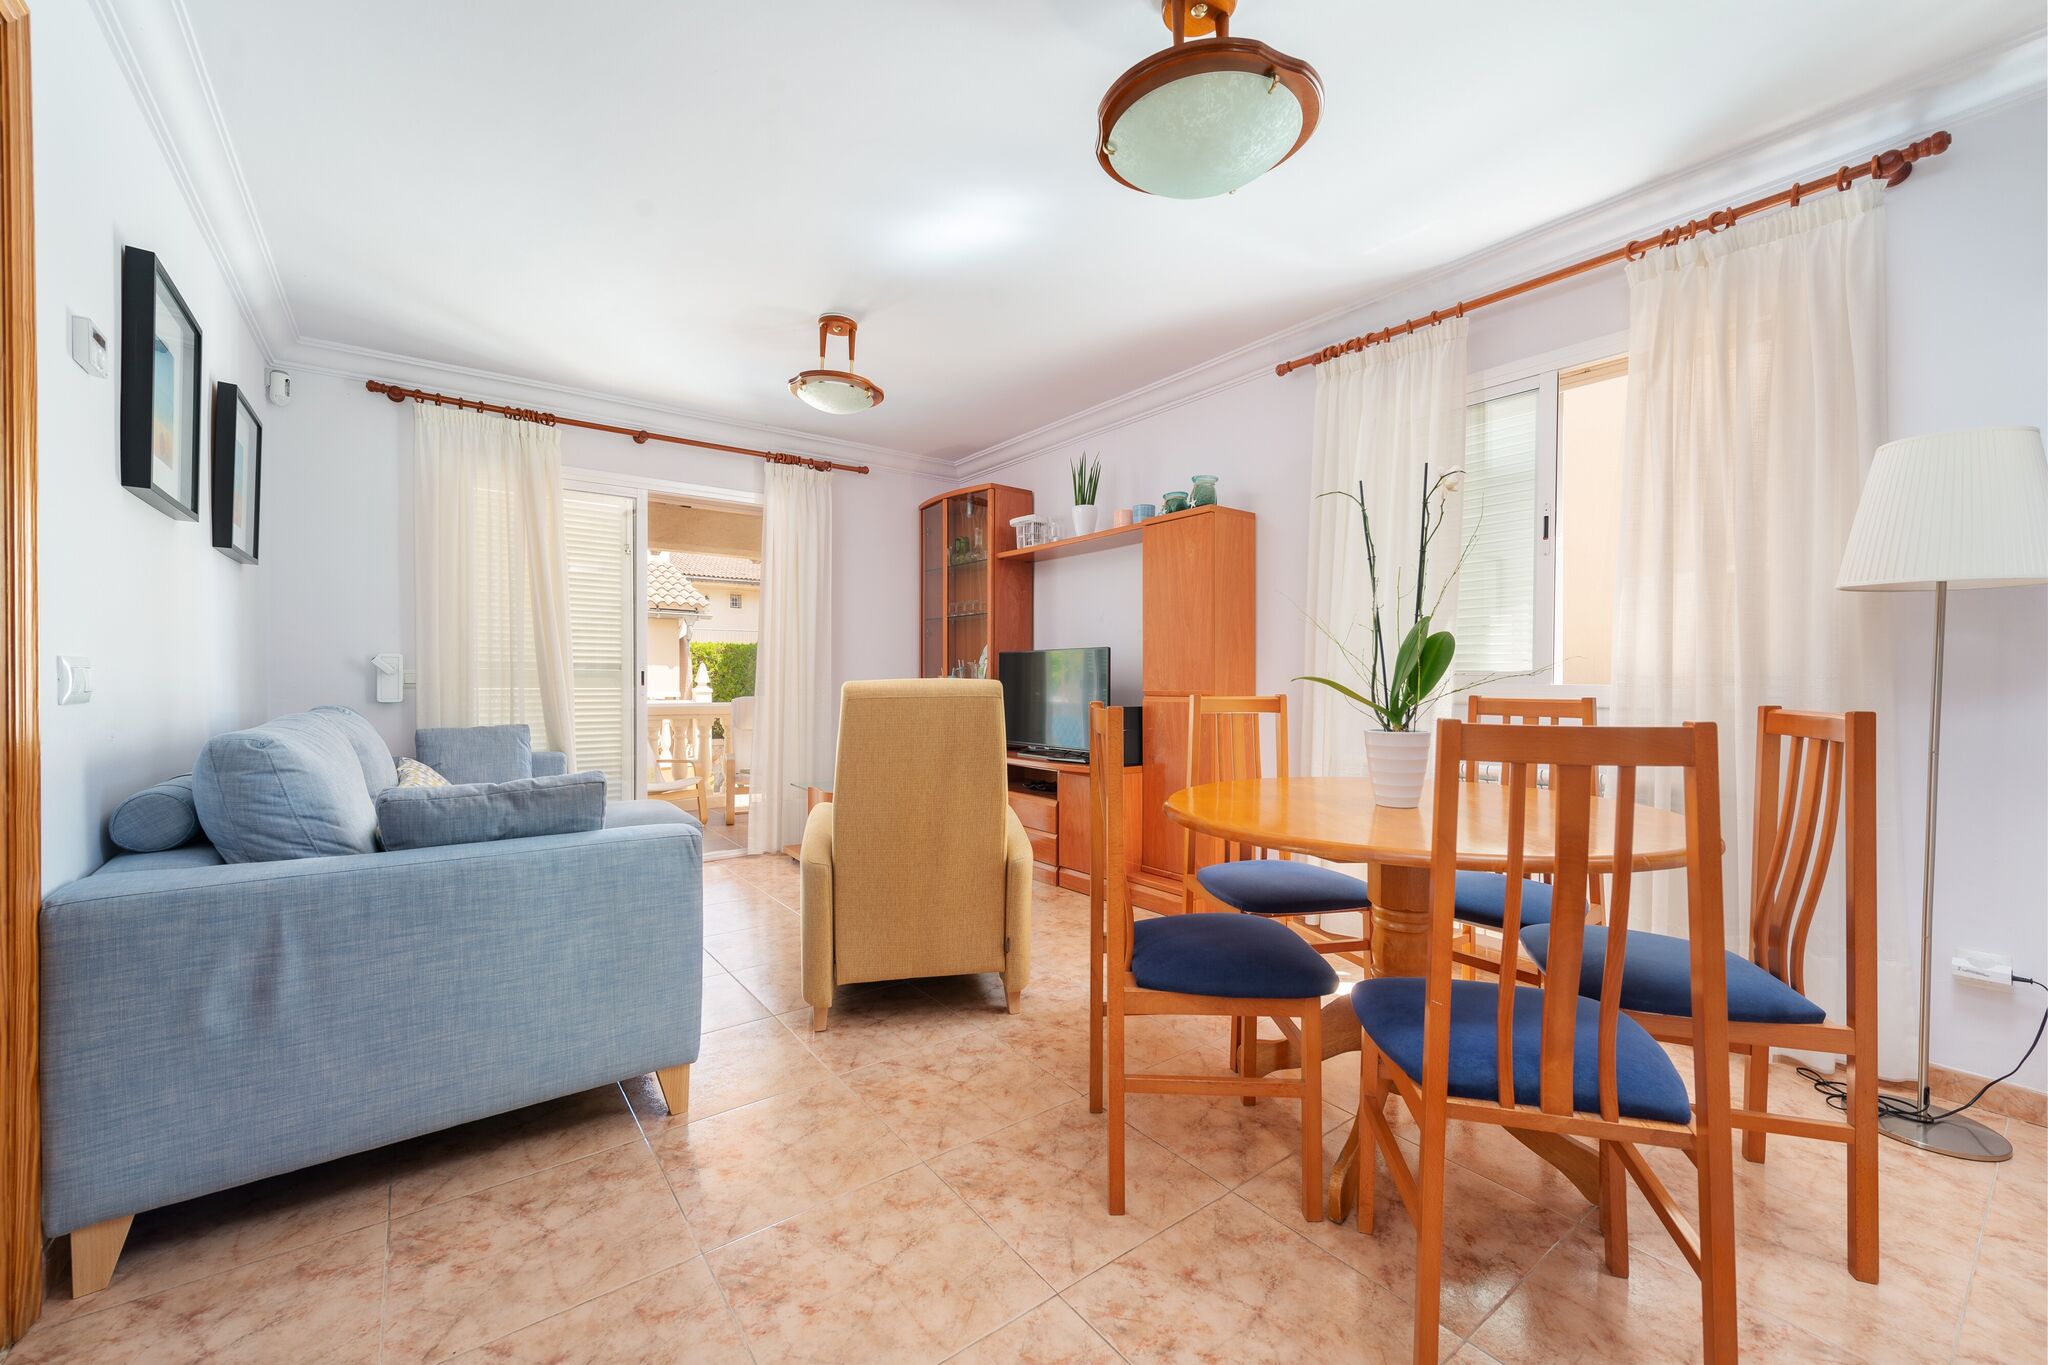 ARITJA, 5 - Ferienhaus für 5 Personen in Port d'Alcudia.